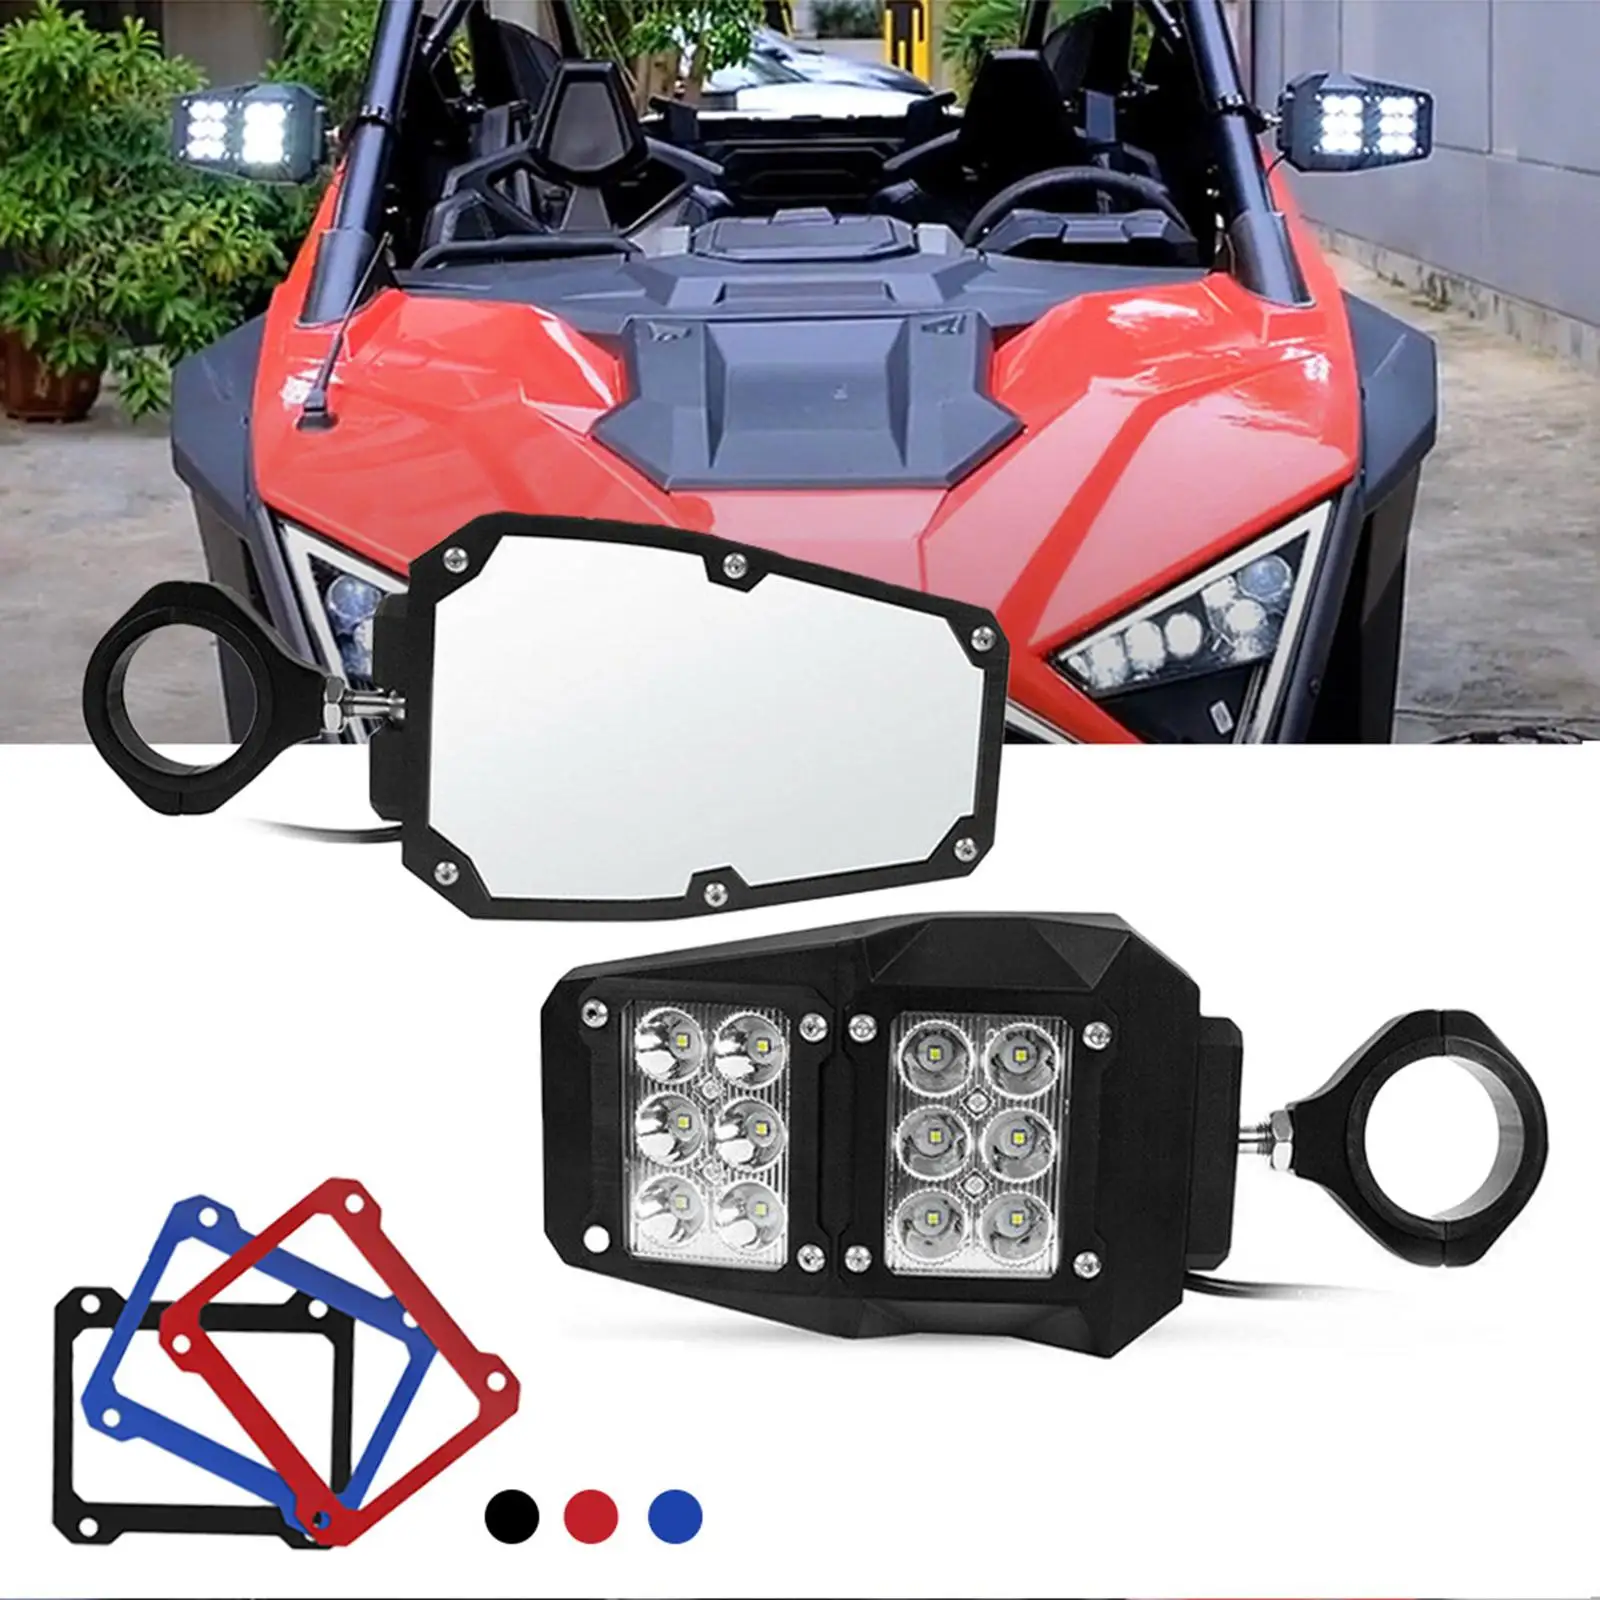 All Topography Vehicle UTV/ATV Mirror with Light Rustproof for Auto Motorcycle